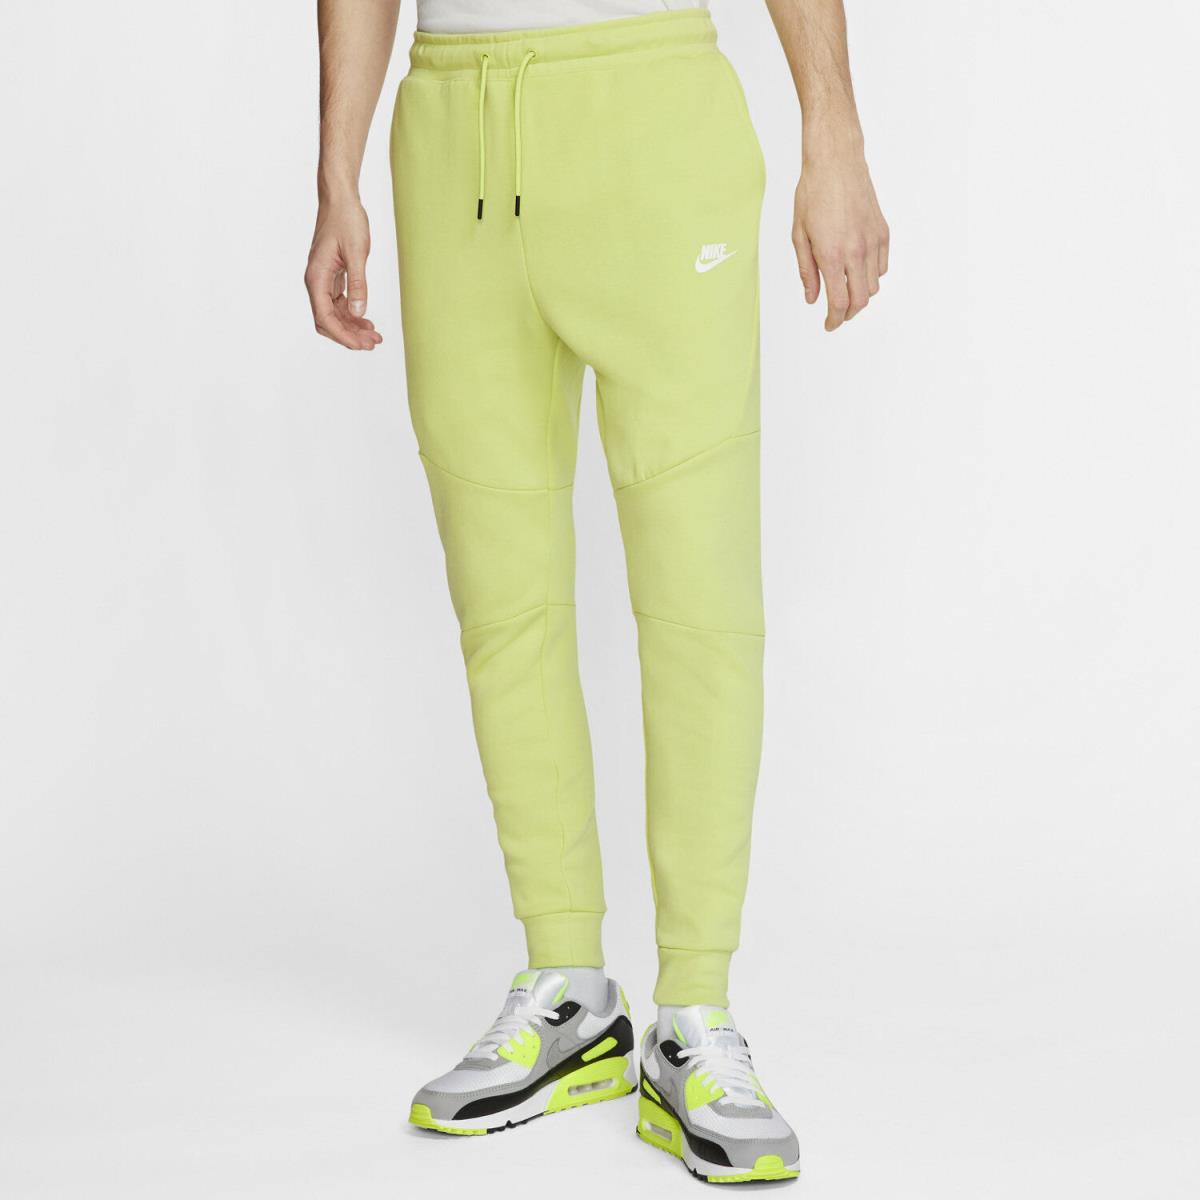 Nike Tech Fleece Pants - S - 805162-367 Sportswear Charcoal Limelight Lime White